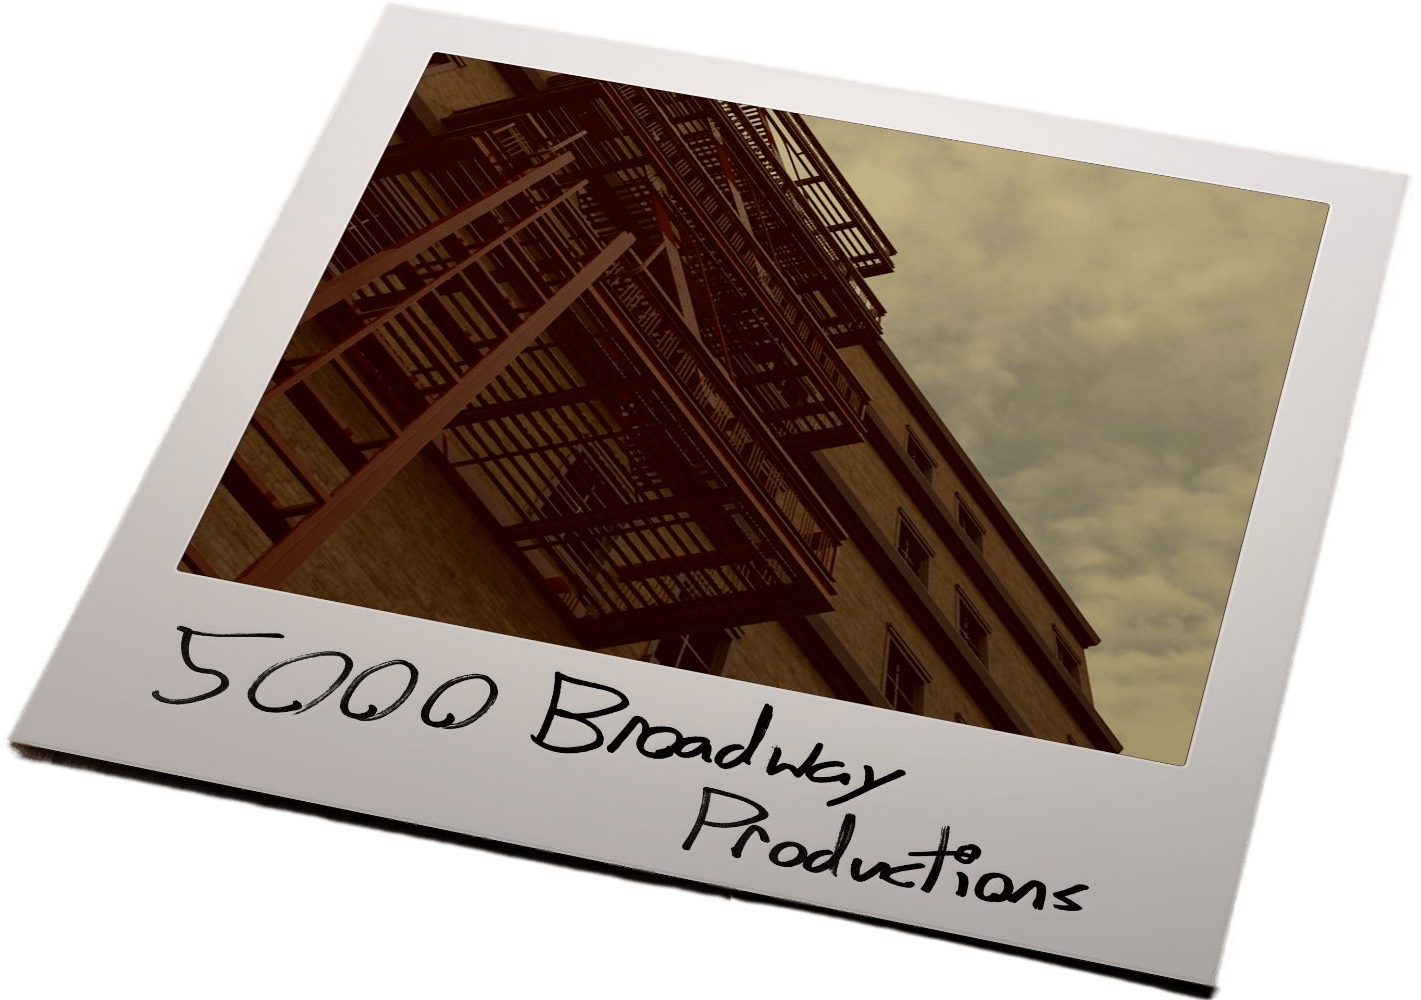 5000 Broadway Productions Logo